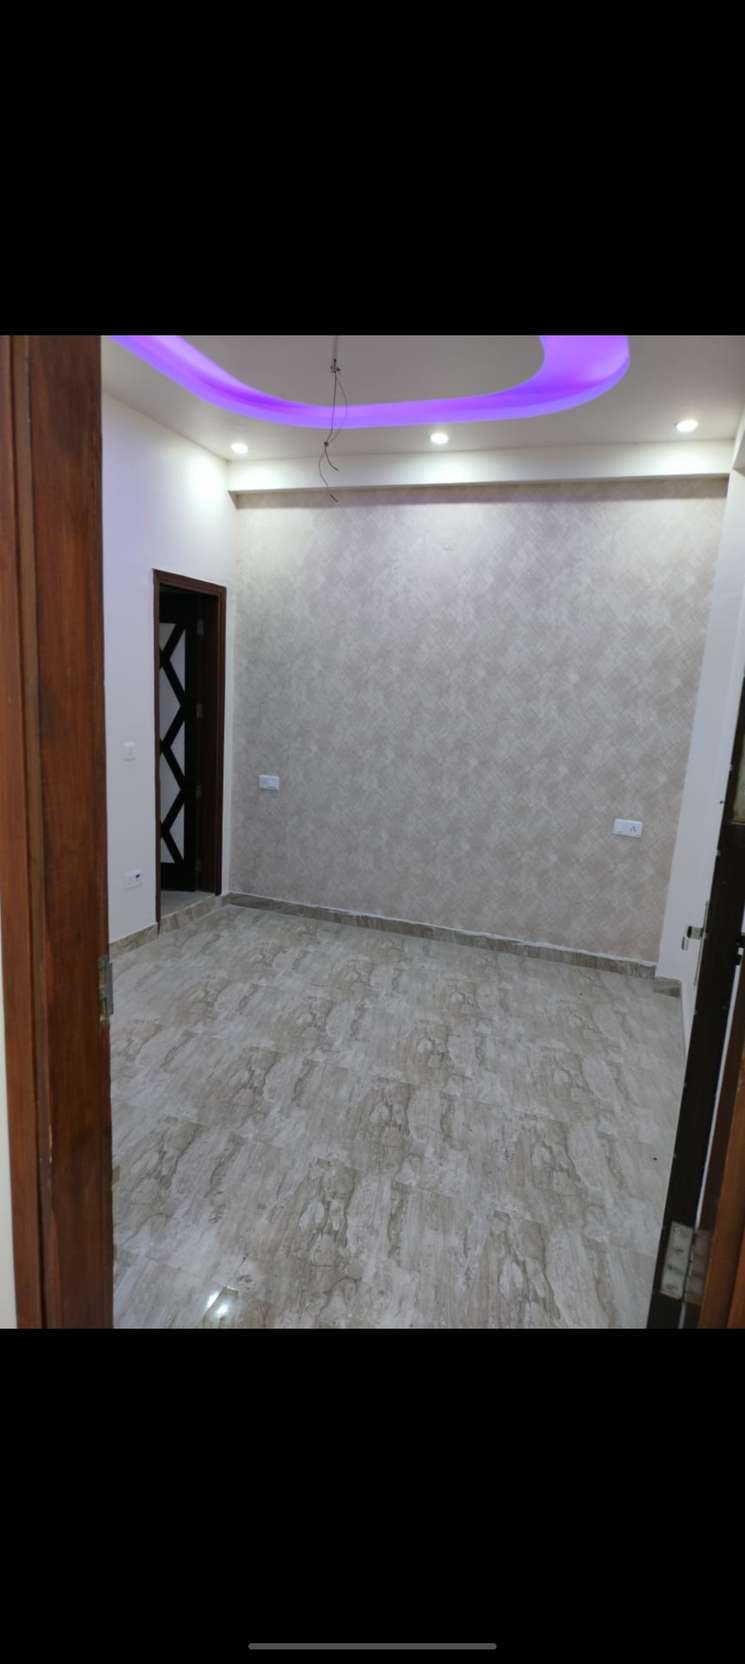 3.5 Bedroom 110 Sq.Yd. Builder Floor in New Colony Gurgaon